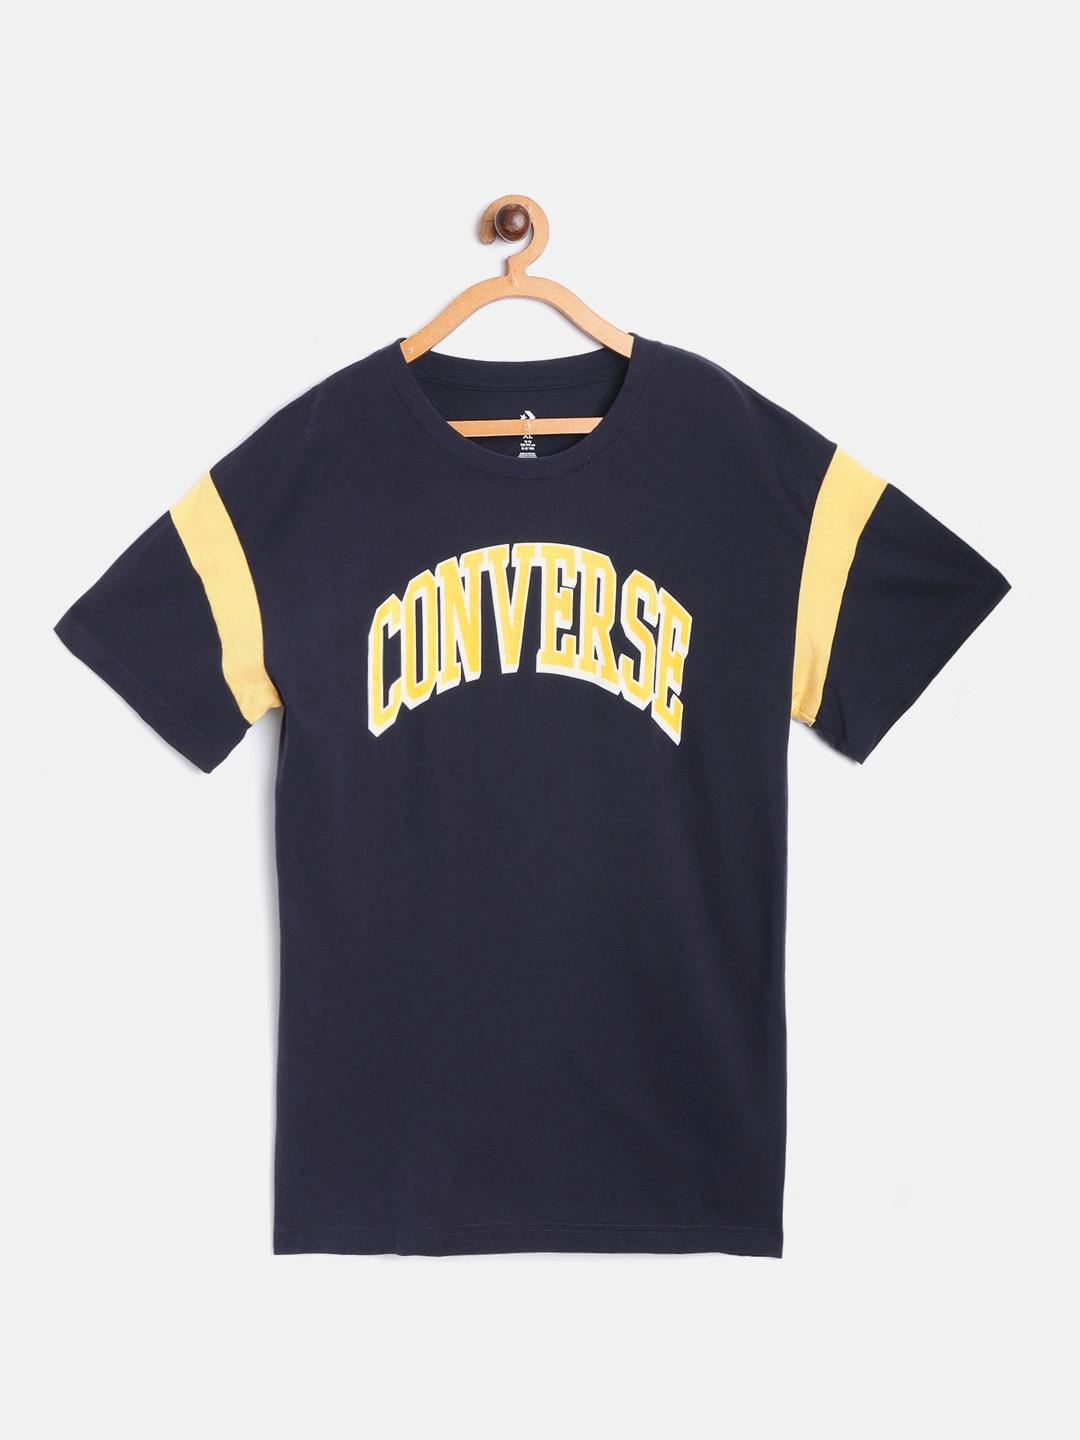 Converse Boys Navy Blue & Yellow Pure Cotton Brand Logo Print Round Neck T-shirt